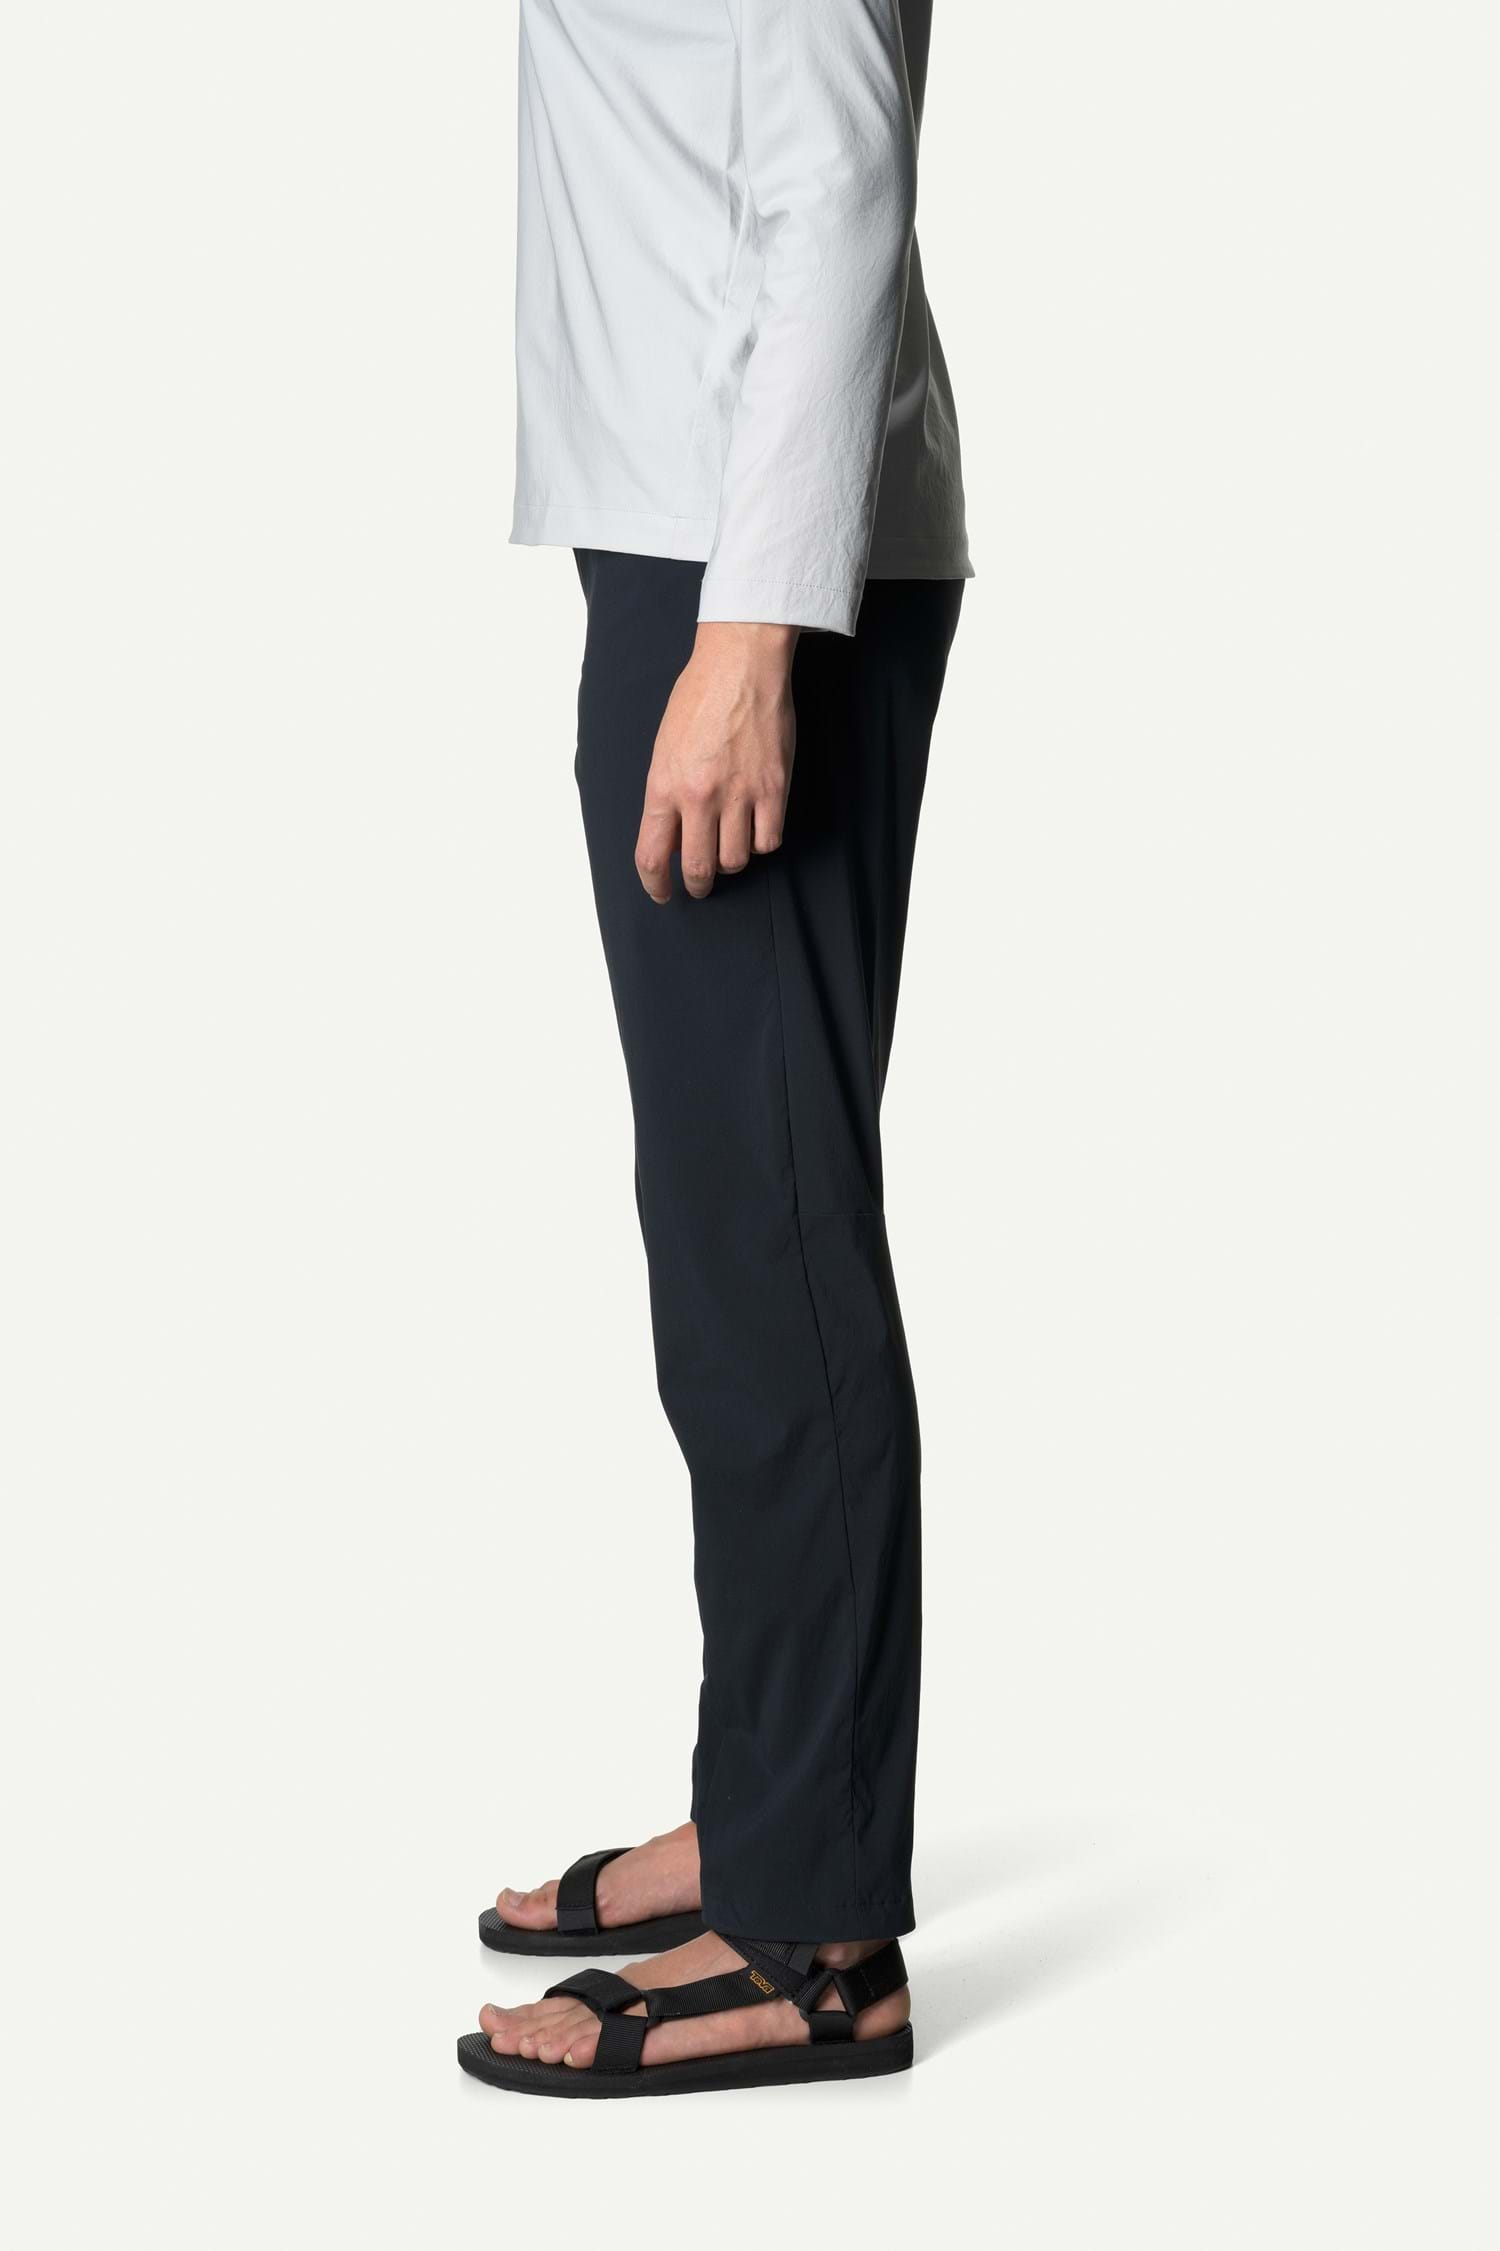 Houdini Sportswear BFF Pants - Pantalones impermeable - Mujer